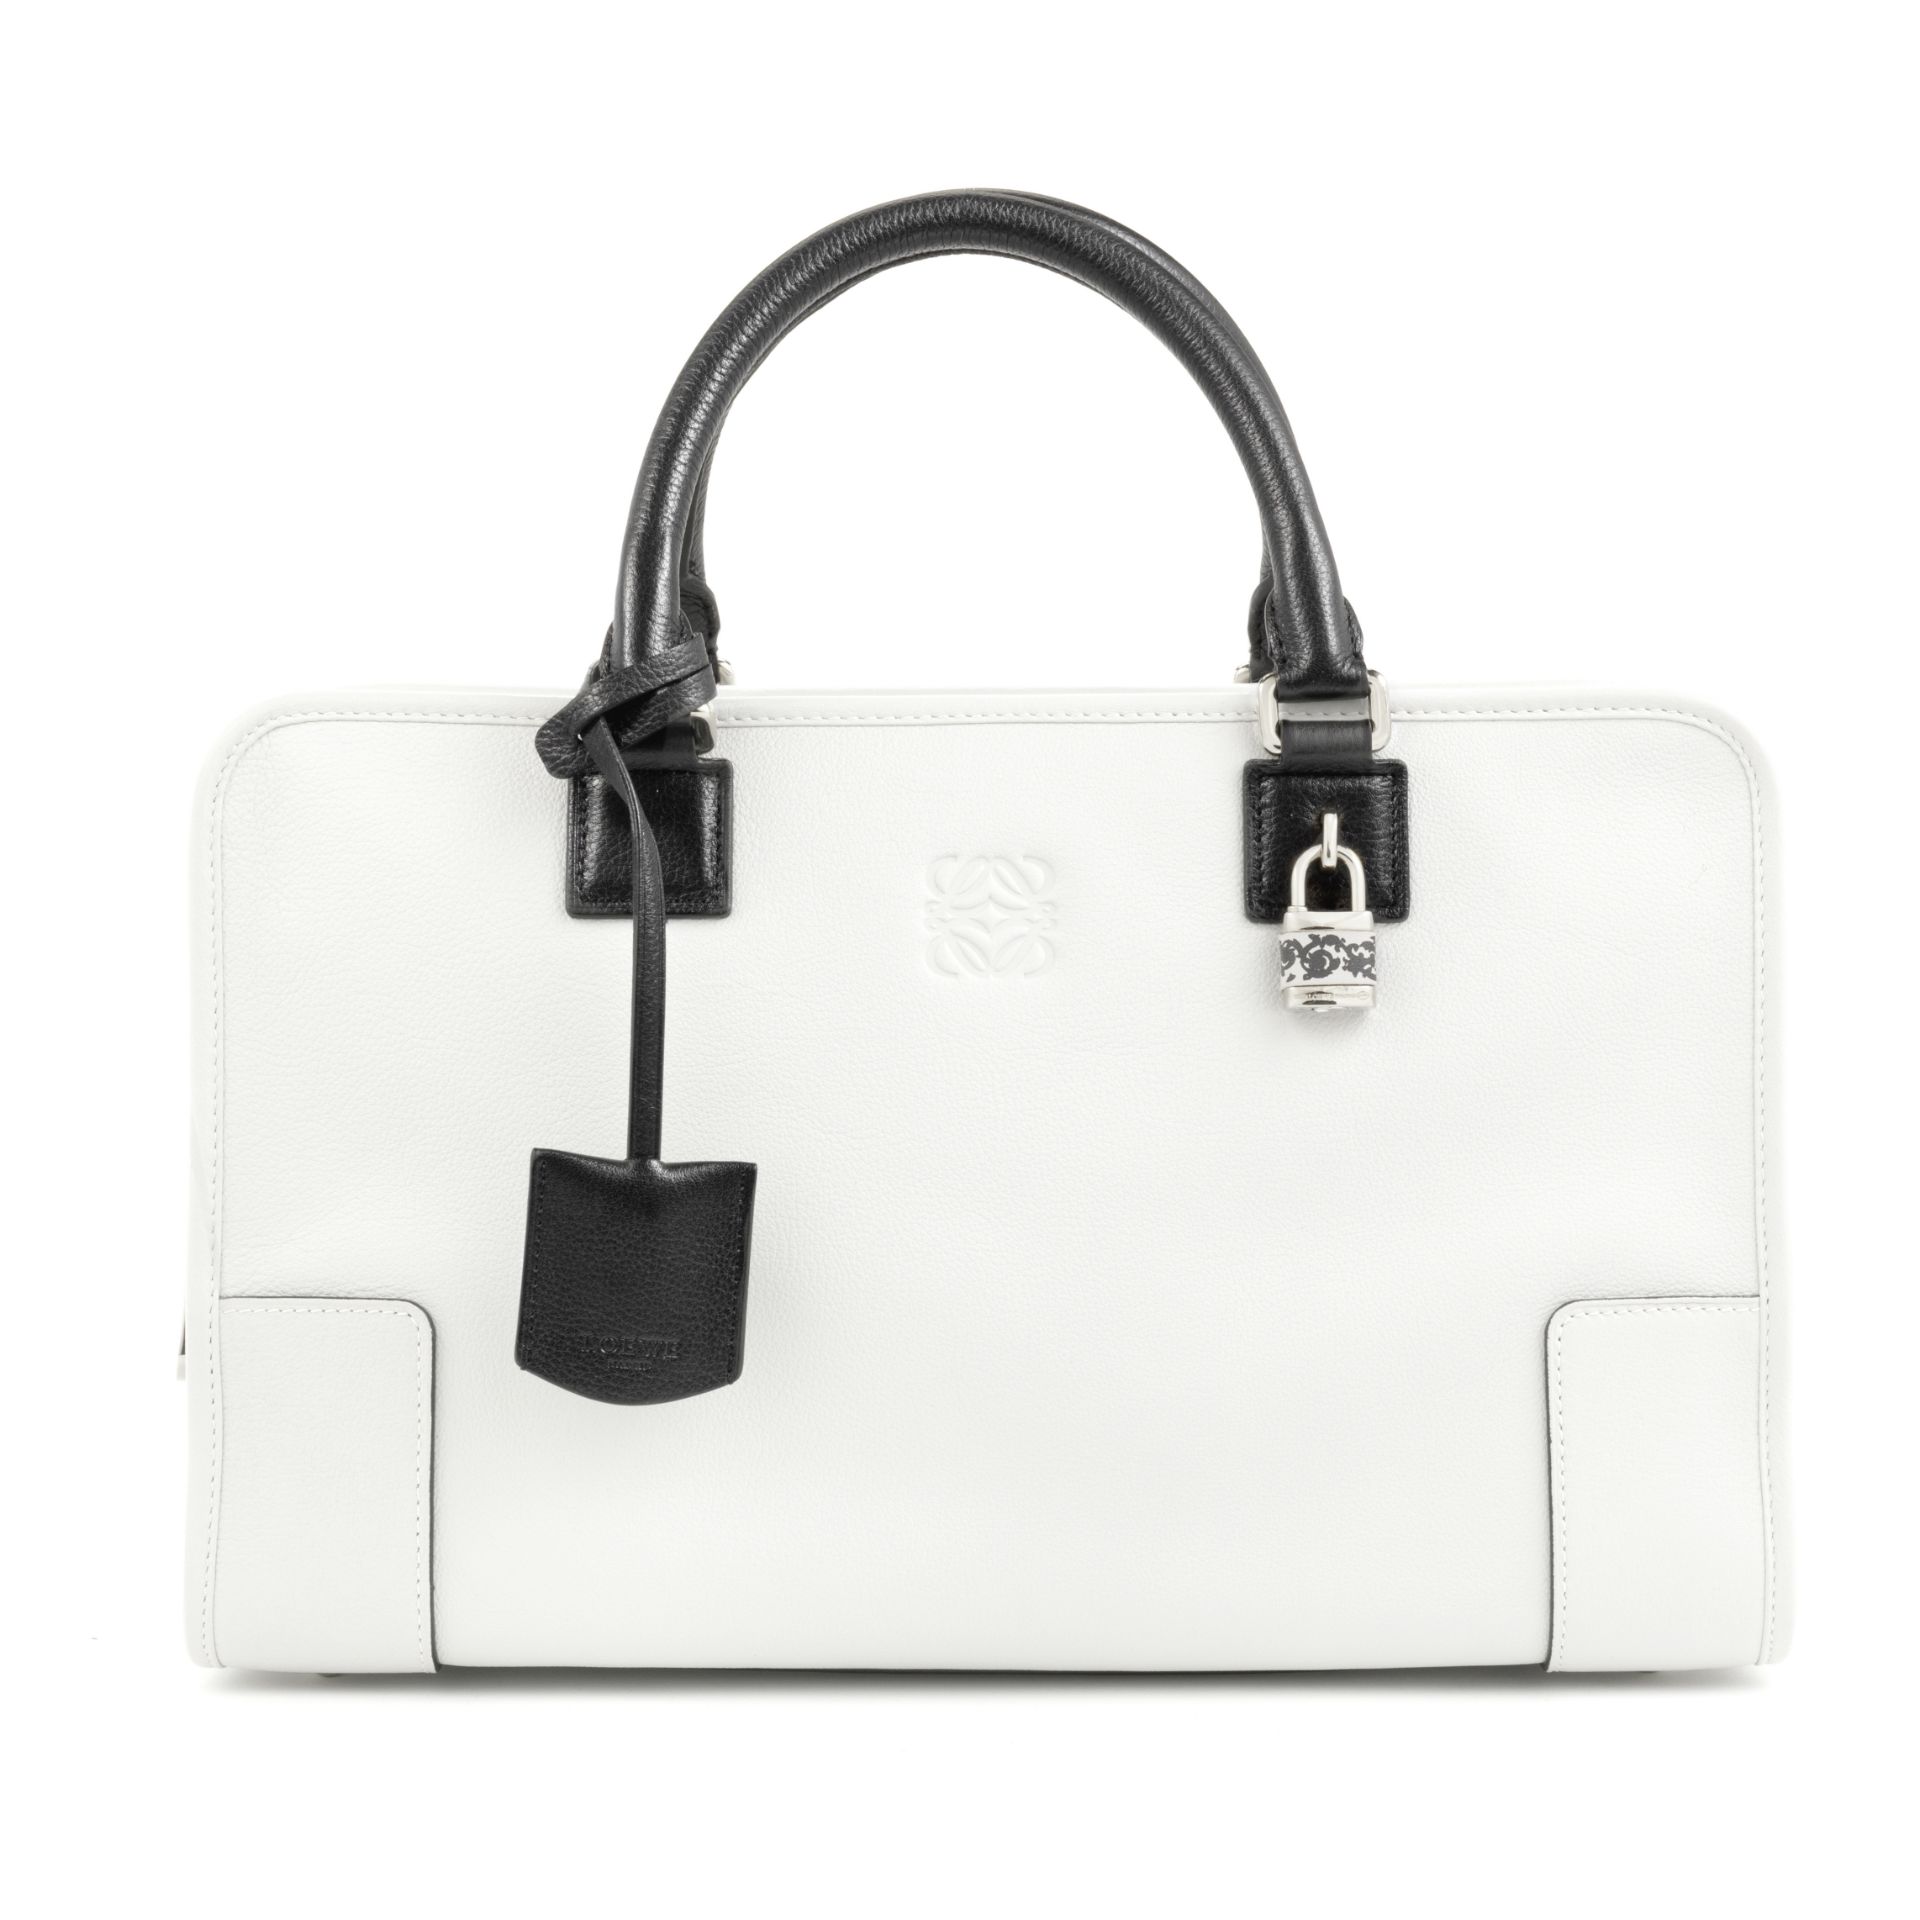 White 'Barroco' Amazona Bag, Loewe, Limited edition 2012, (Includes keys, cloche, padlock and dus...